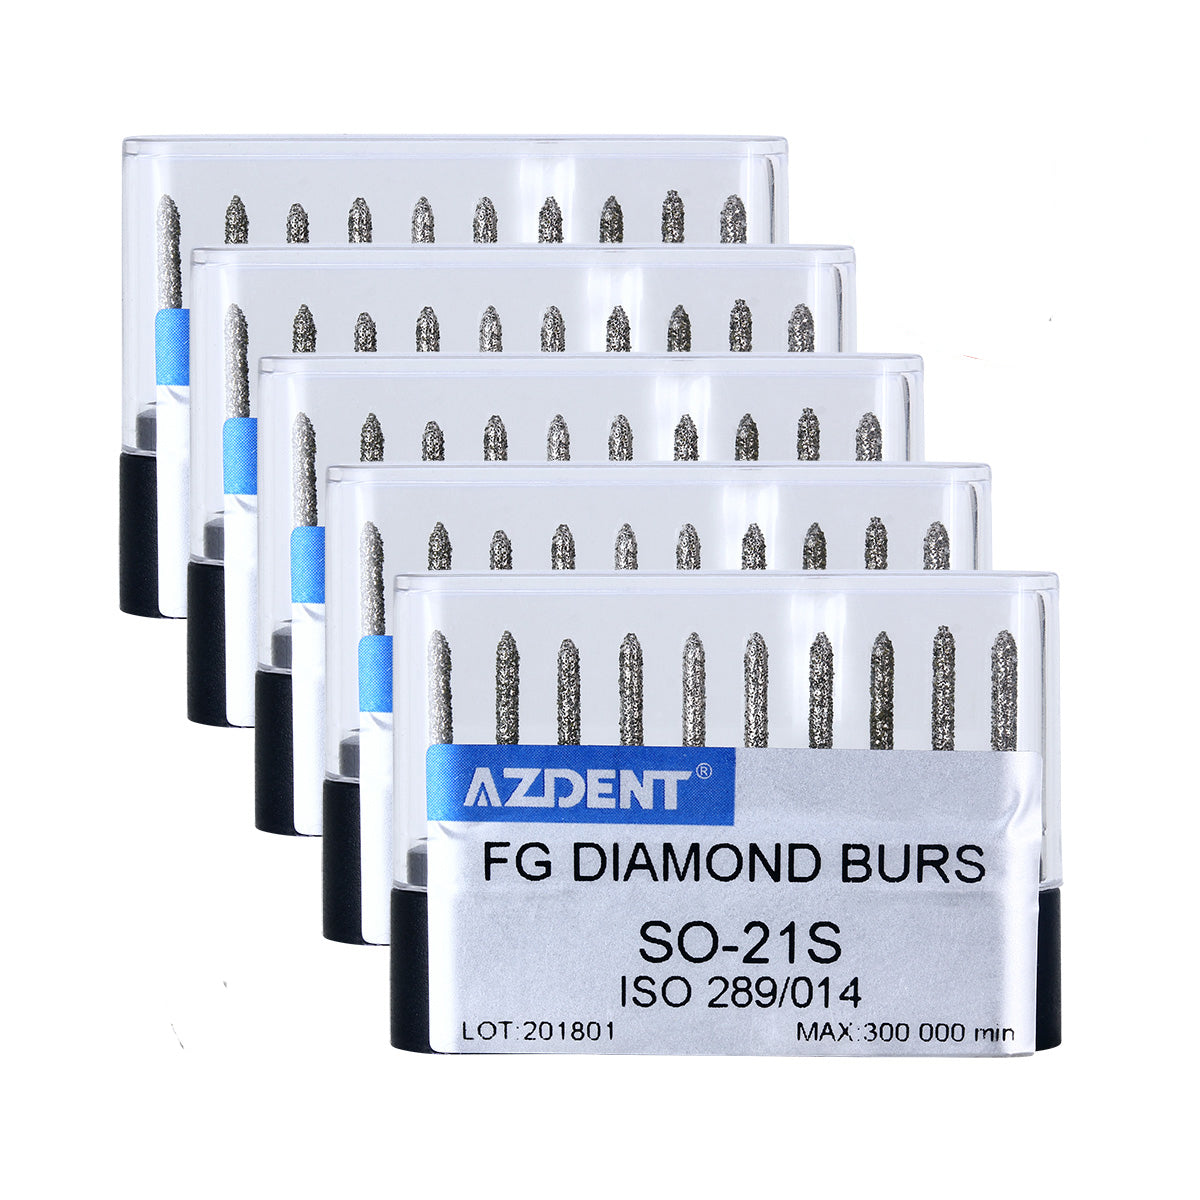 5 Boxes AZDENT FG Diamond Burs SO-21S 10pcs/Box - azdentall.com